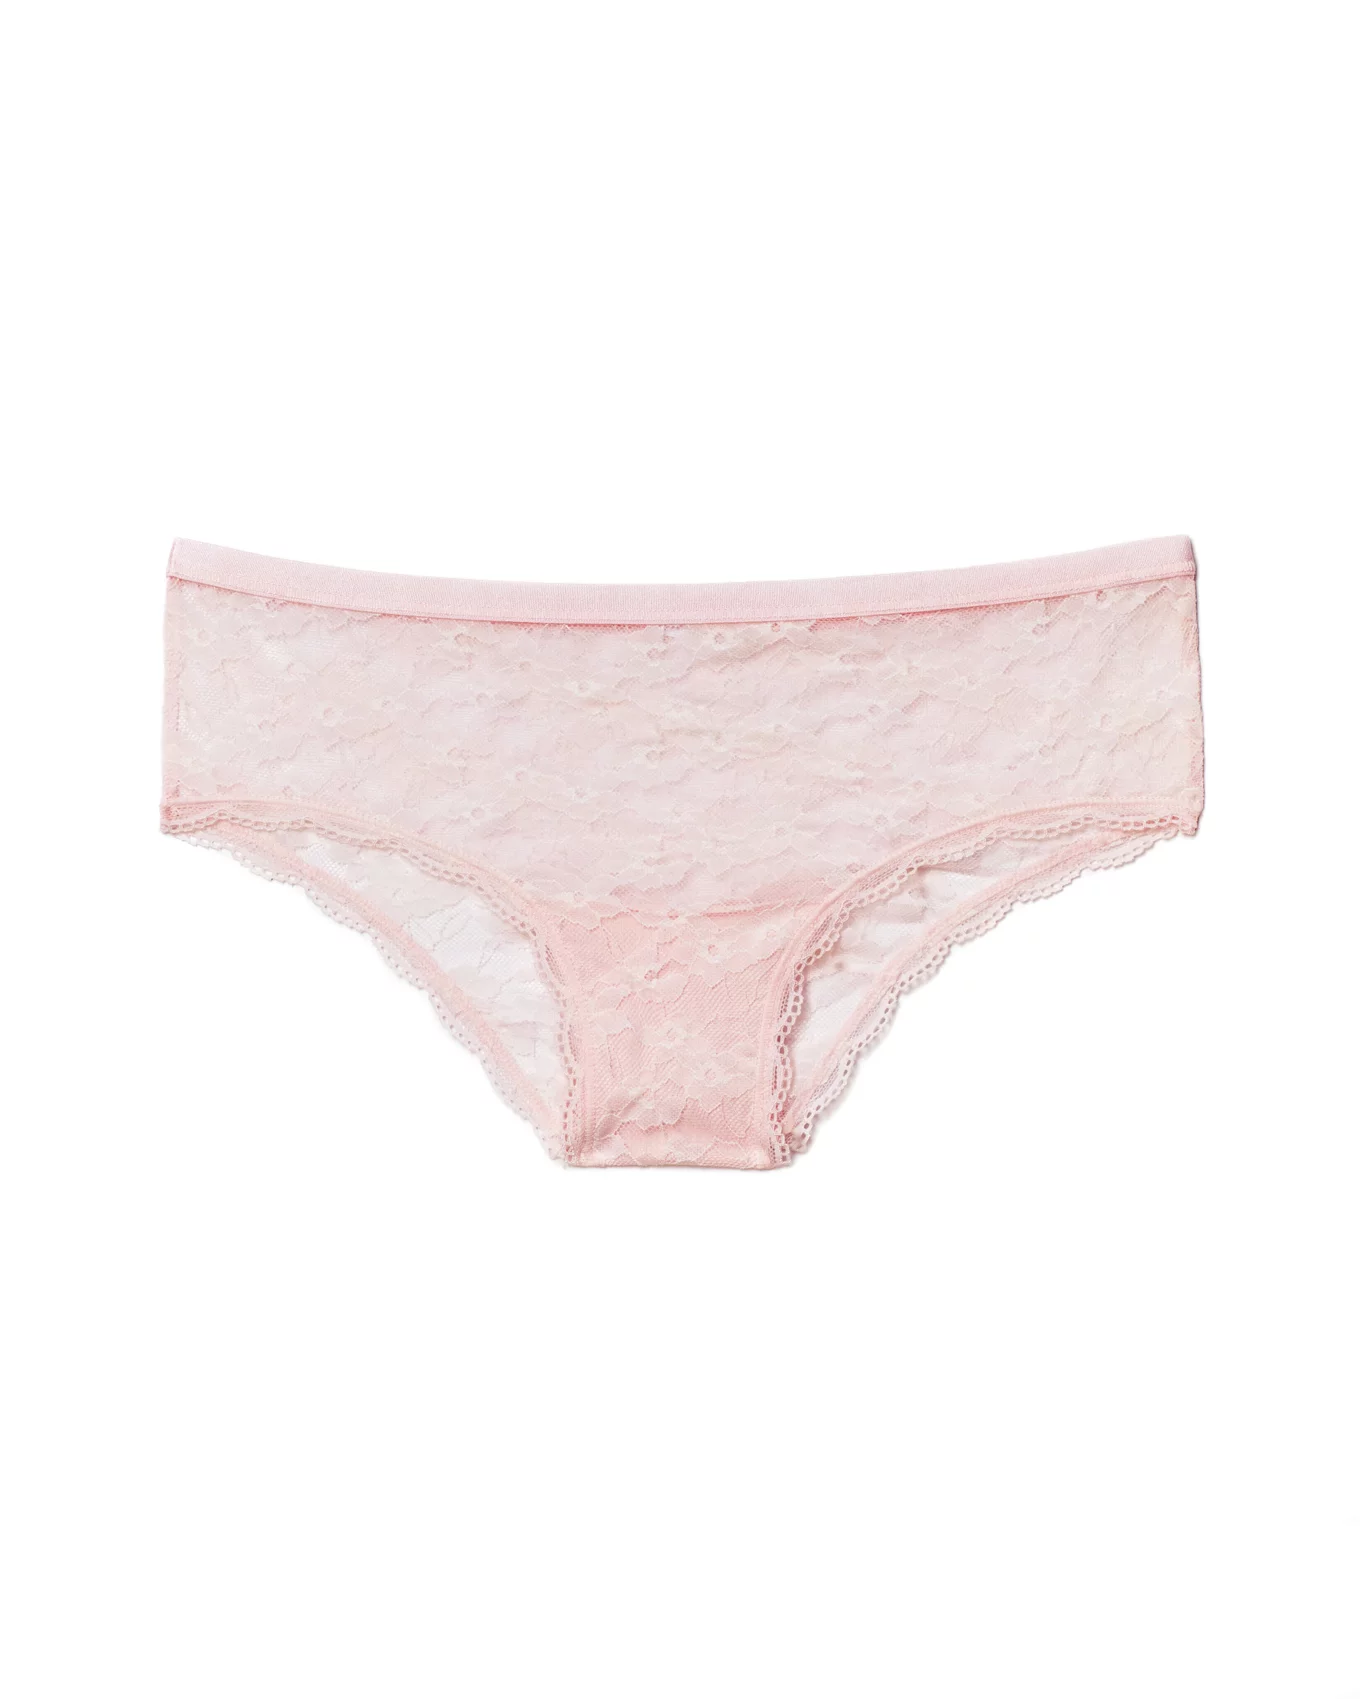 Period Underwear Cheeky - PURE ROSY